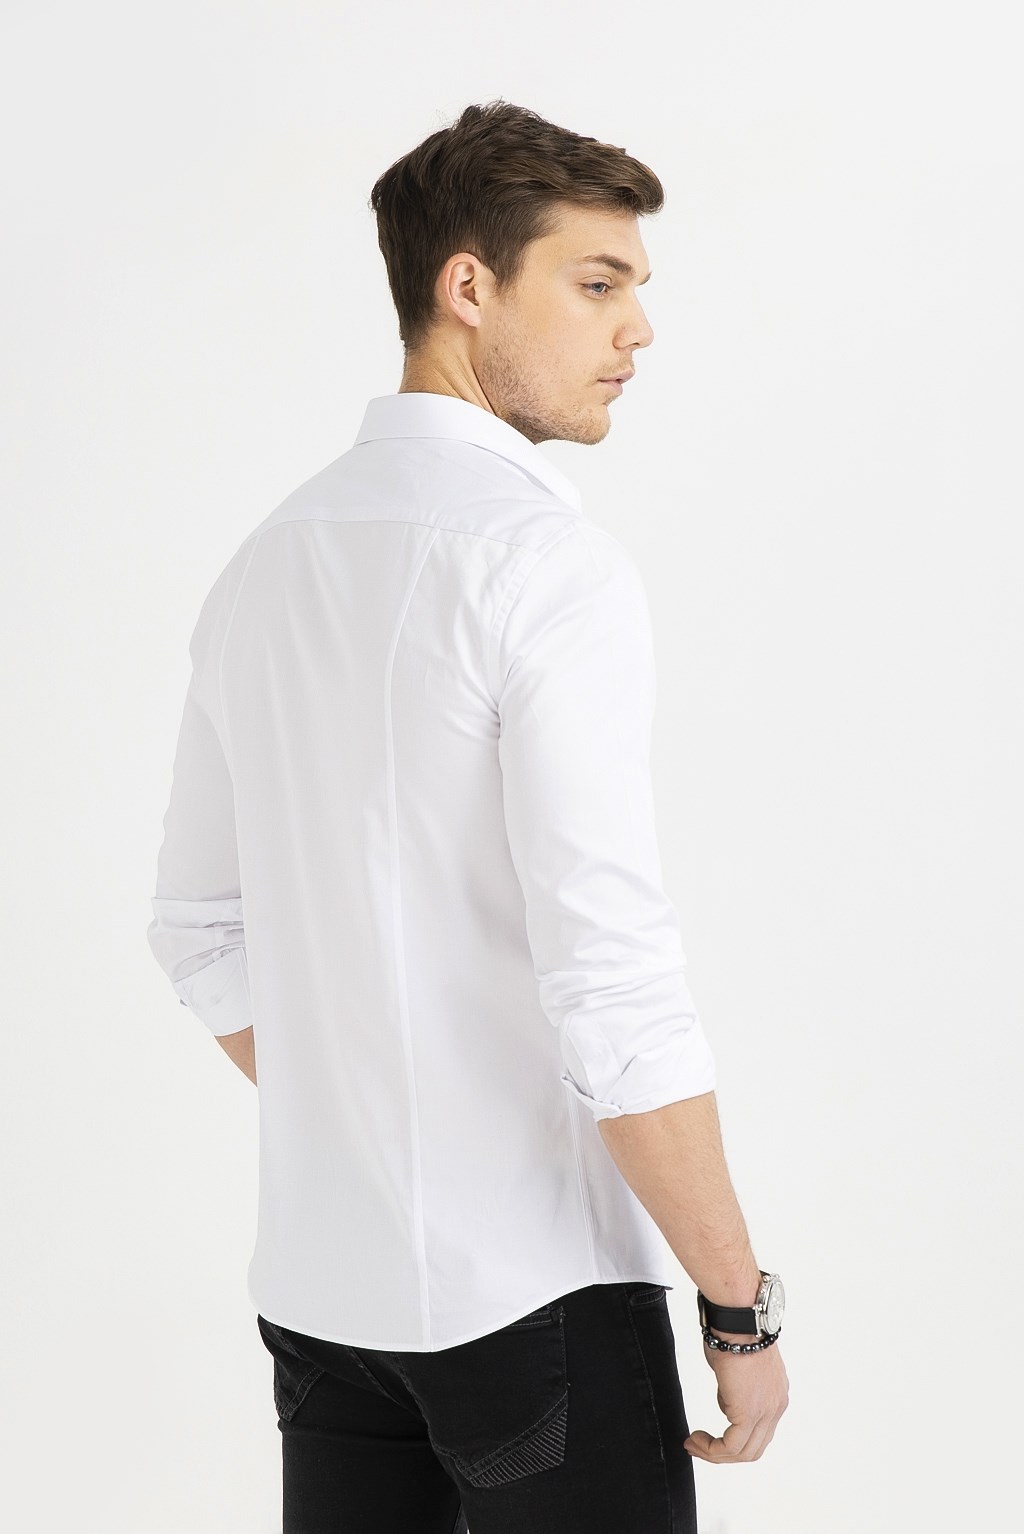 Beyaz Düz Klasik Yaka Slim Fit Gömlek A92B2217-05 - AVVA